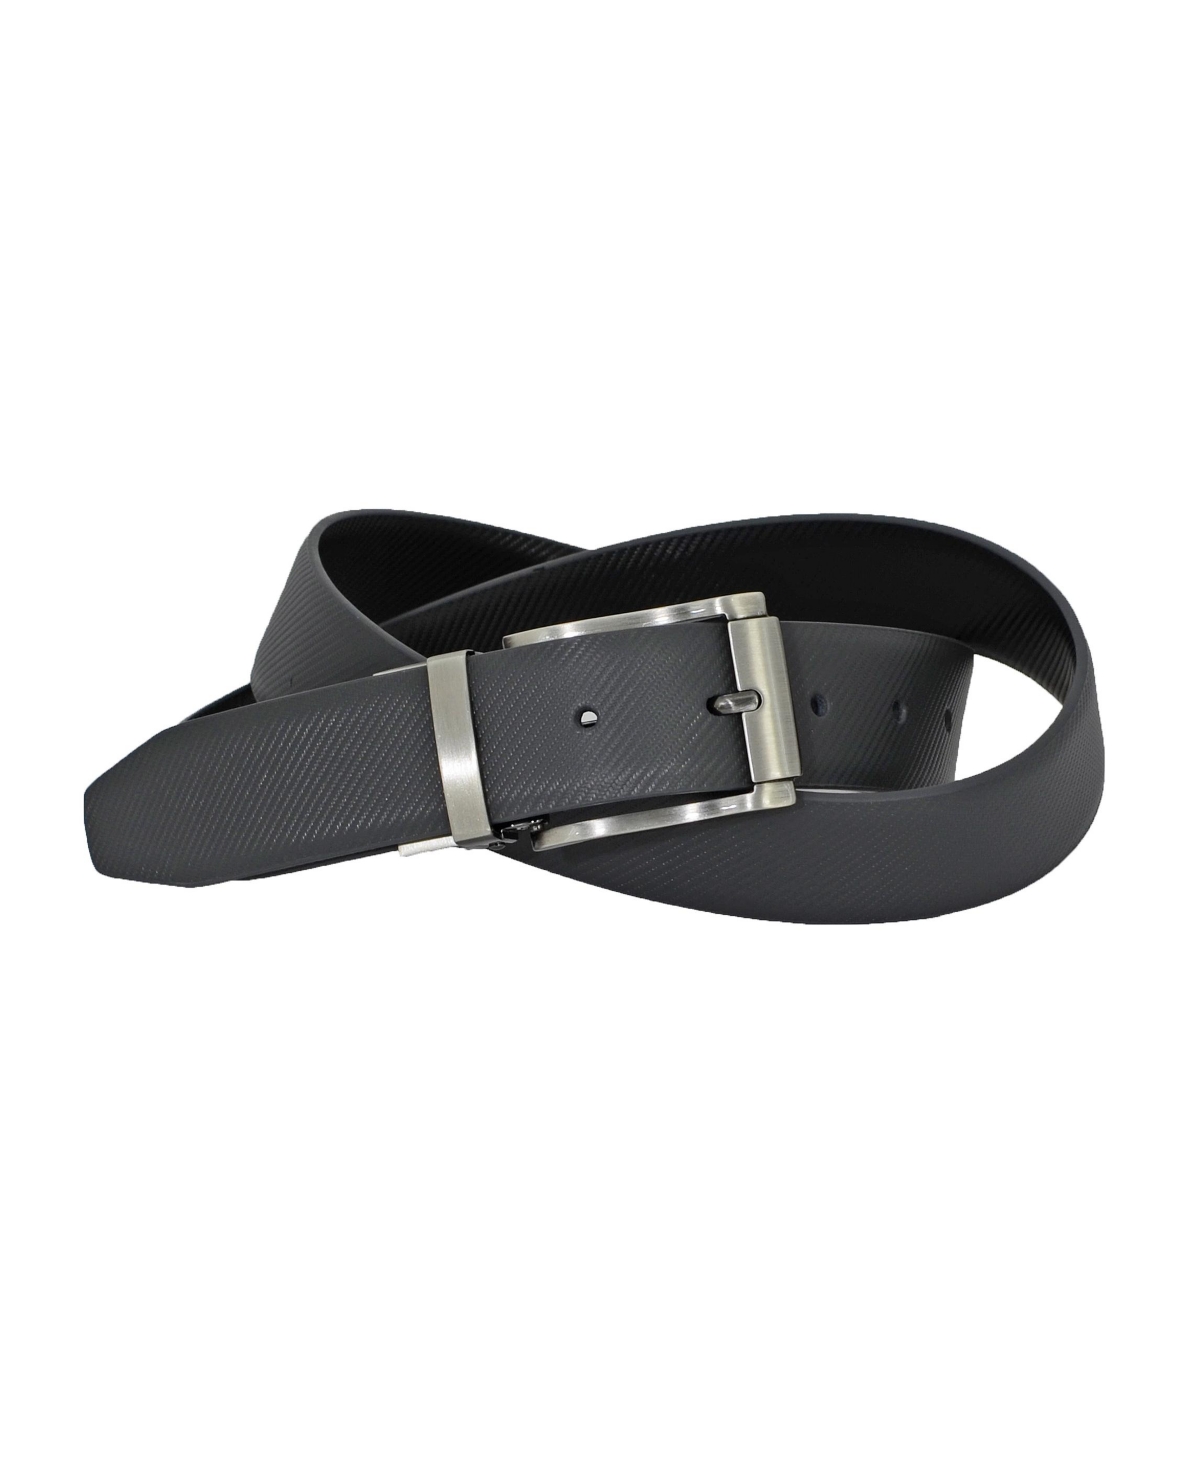 Men's Leather Reversible Dress Belt - Charcoal, Black